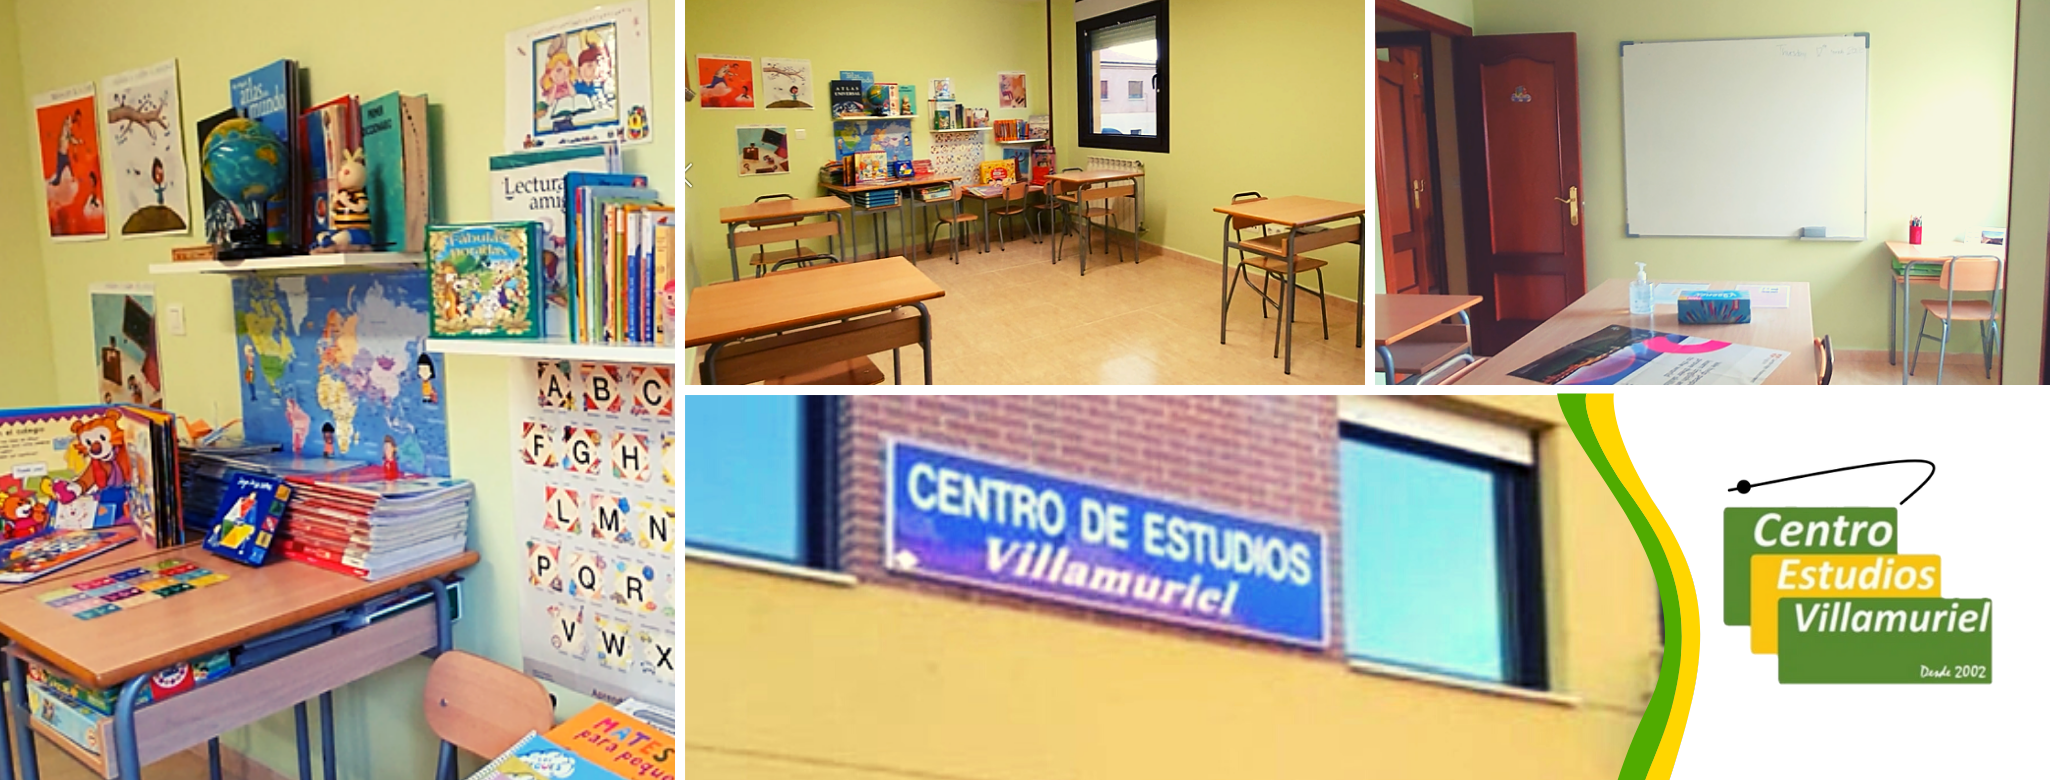 Centro Estudios Villamuriel